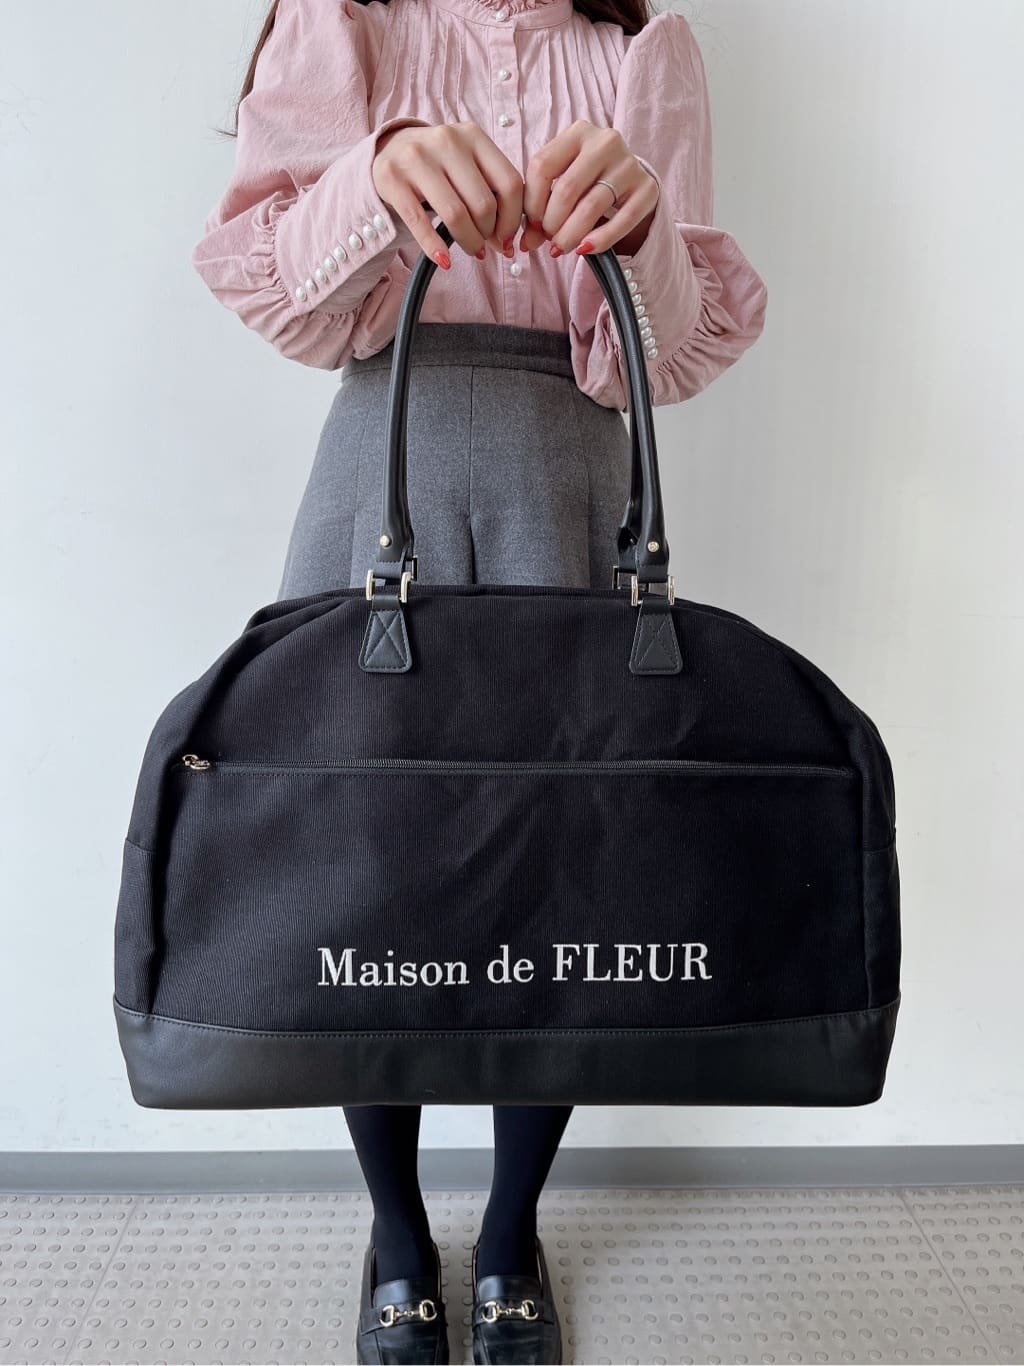 Maison de FLEURの帆布合皮切り替えキャリーオンバッグを使った